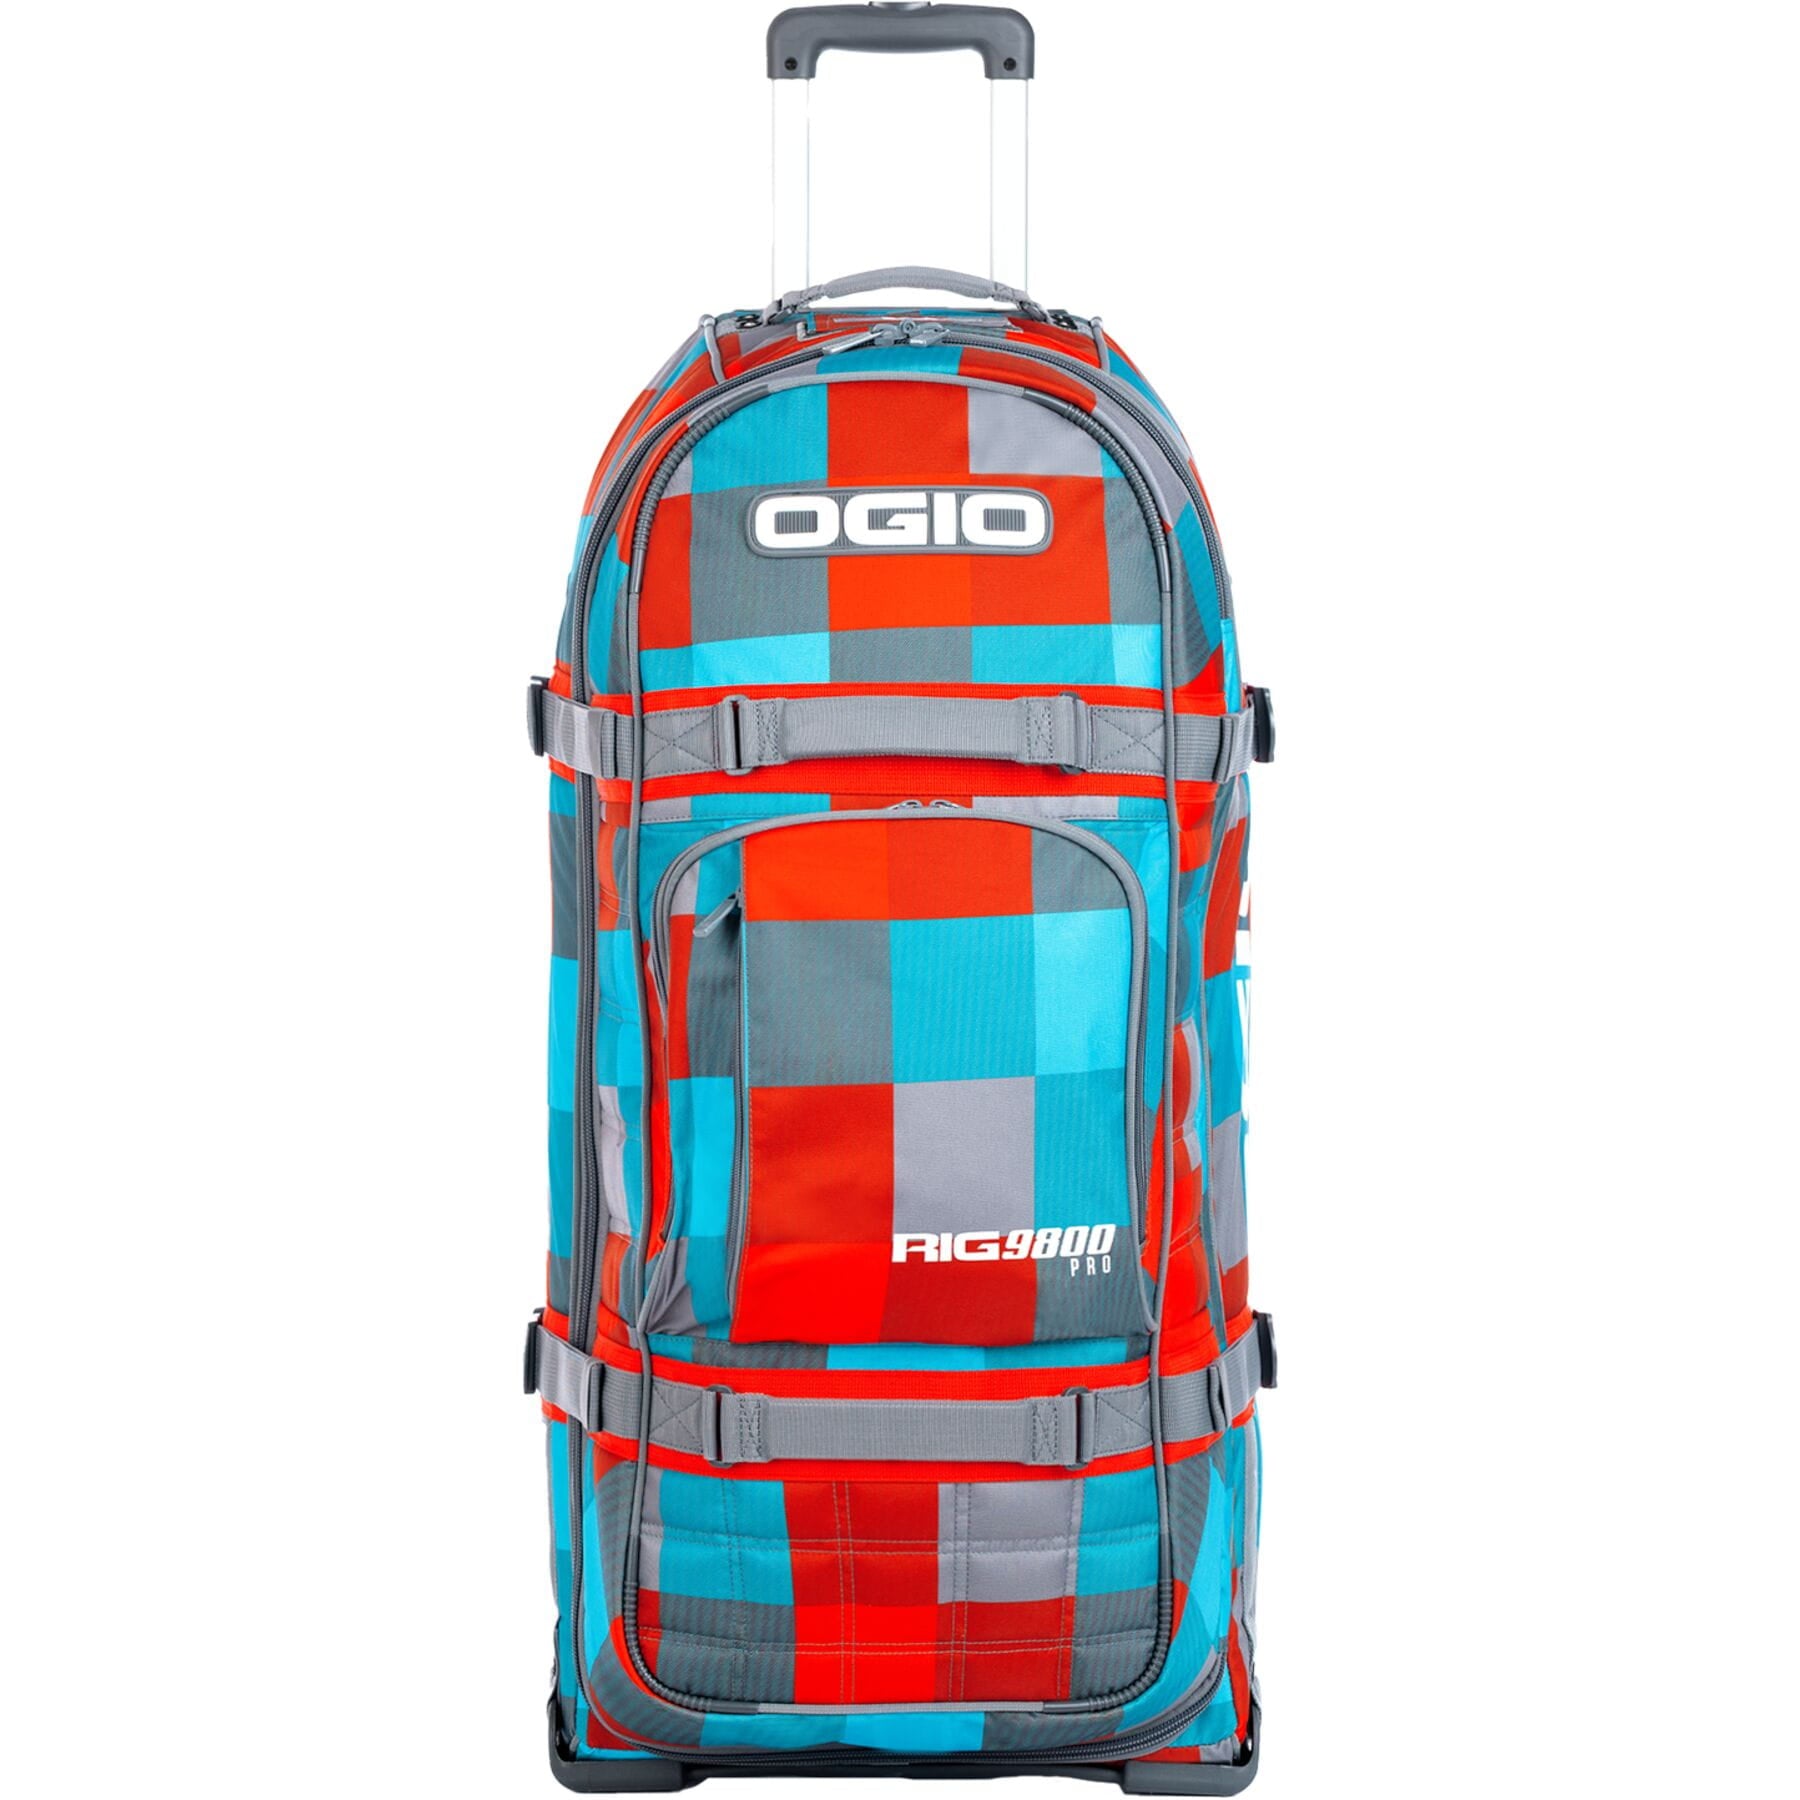 Ogio Rig 9800 PRO Gear Bag Blockade Red